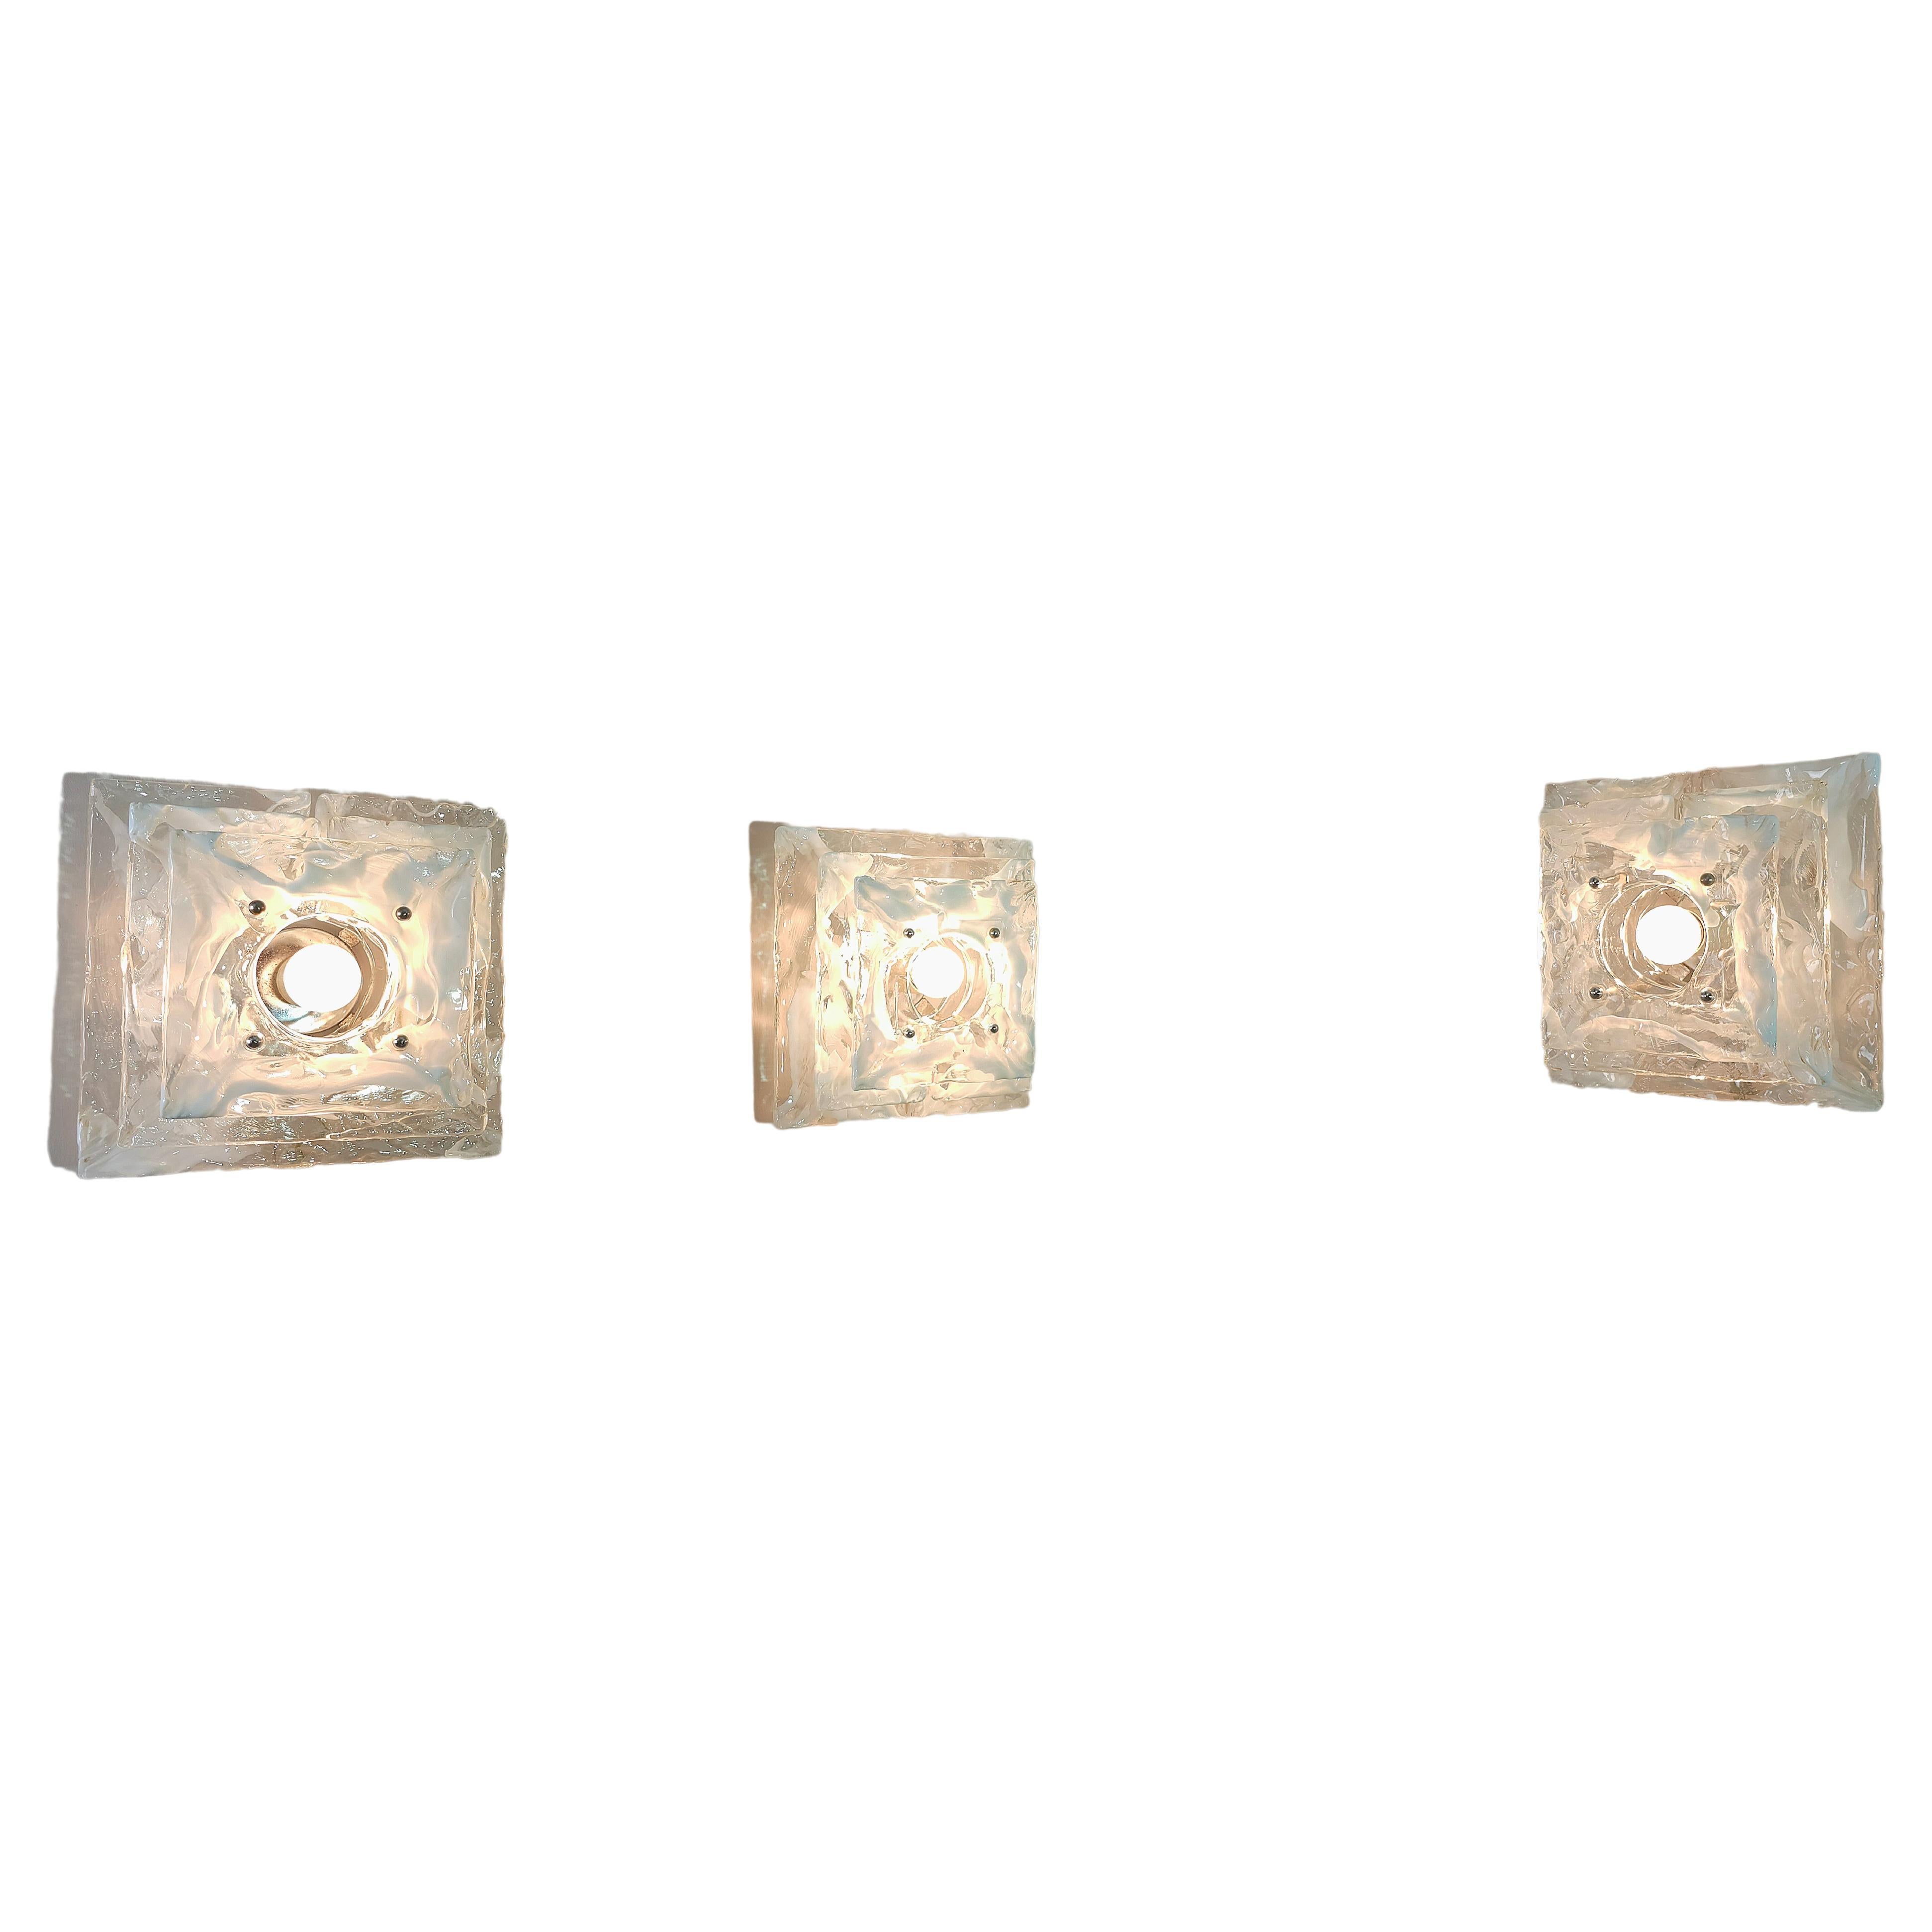  3 Wall Lights Sconces Nason Mazzega  Murano Glass Metal Midcentury Italy 1970s For Sale